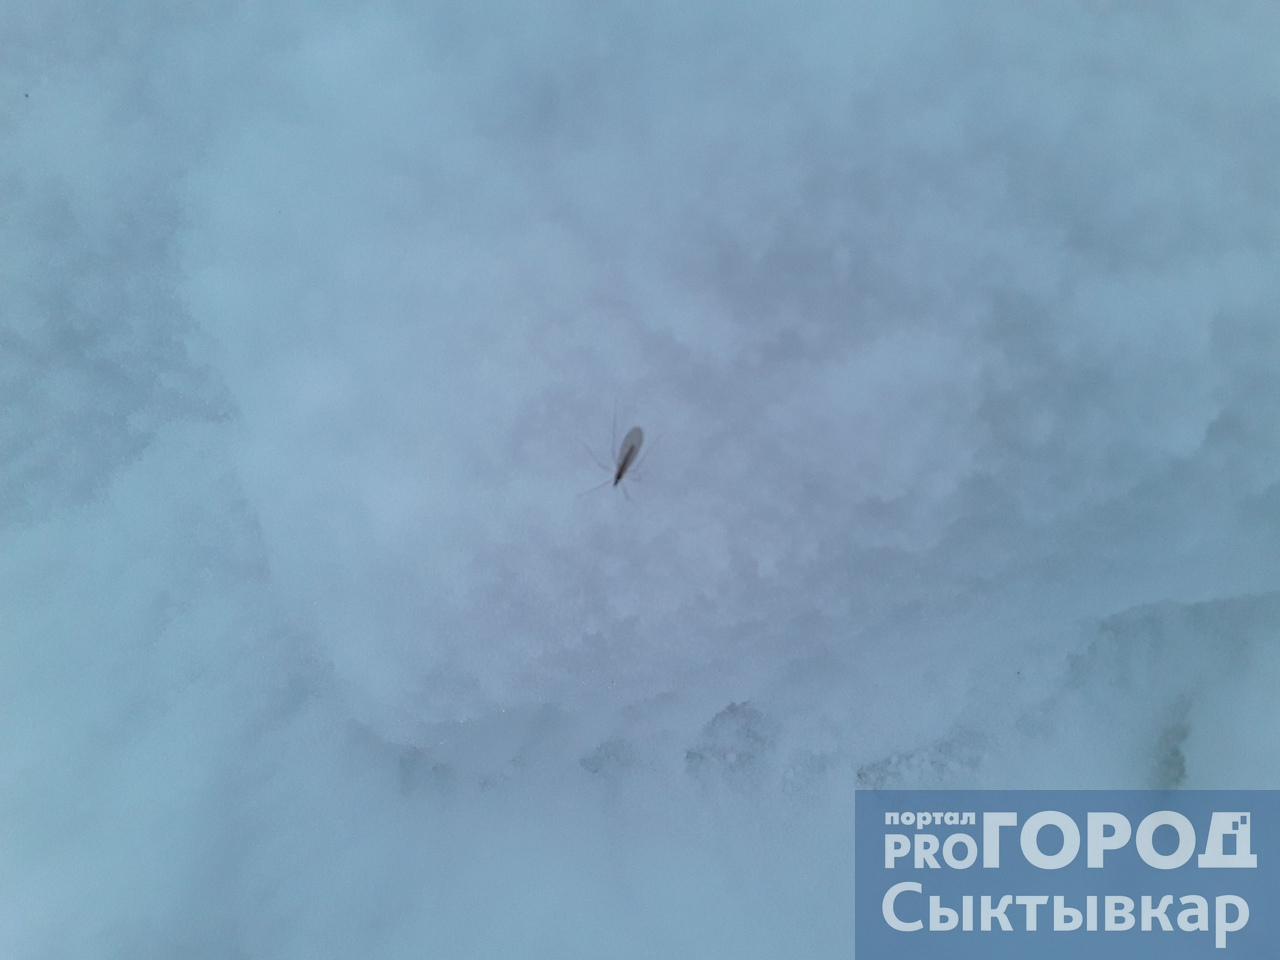 Фото дня в Сыктывкаре: живой комар на январском снегу